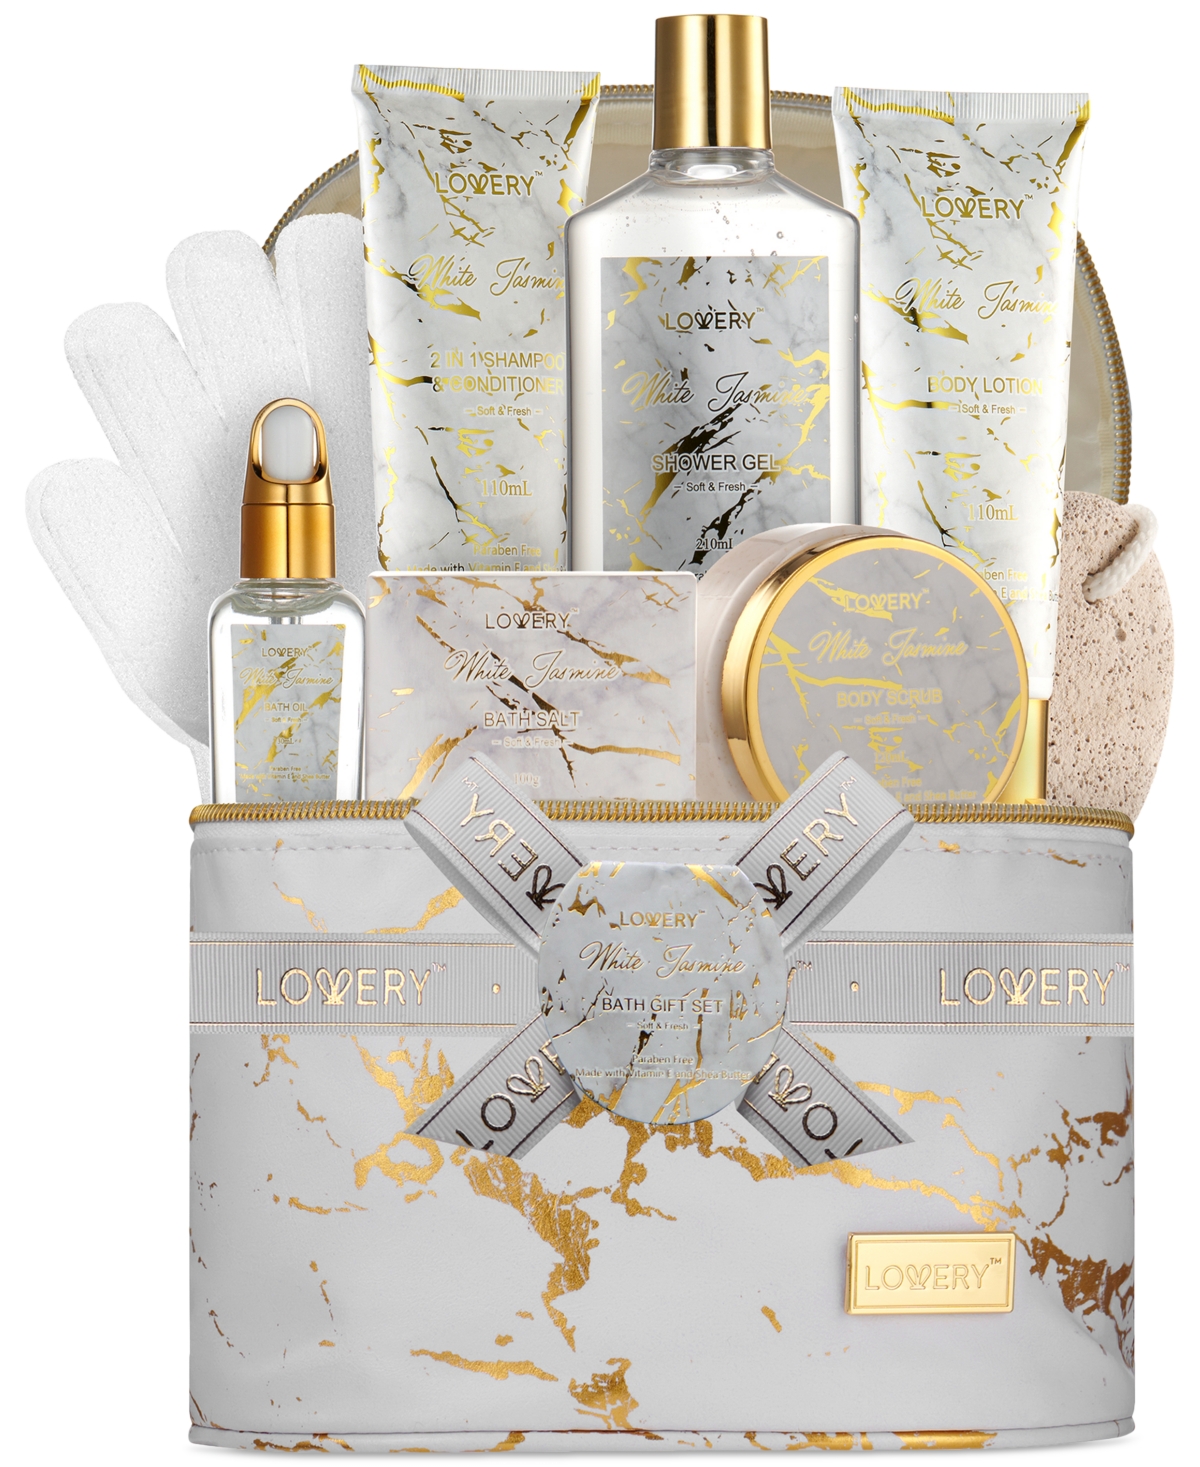 Lovery 8-pc. White Jasmine Body Care Gift Set